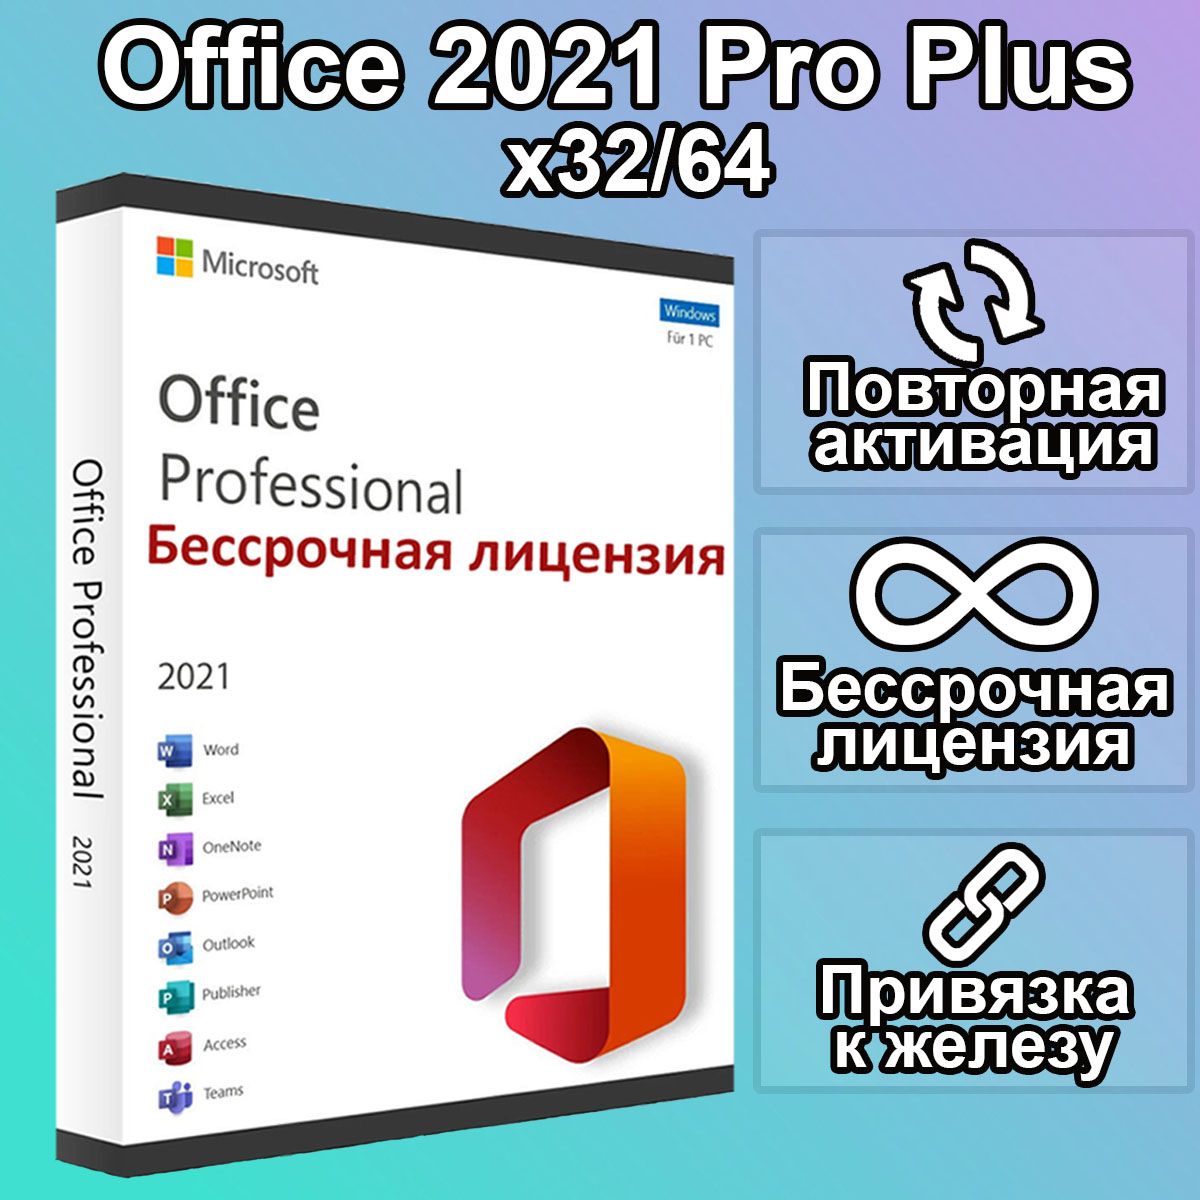 Микрософт офис 2021. Microsoft Office 2021 Pro Plus бессрочный. Office 2021 Pro Plus бессрочный Windows. Офис 2021 про плюс купить. Office 2021 Pro Plus бессрочный без привязки.